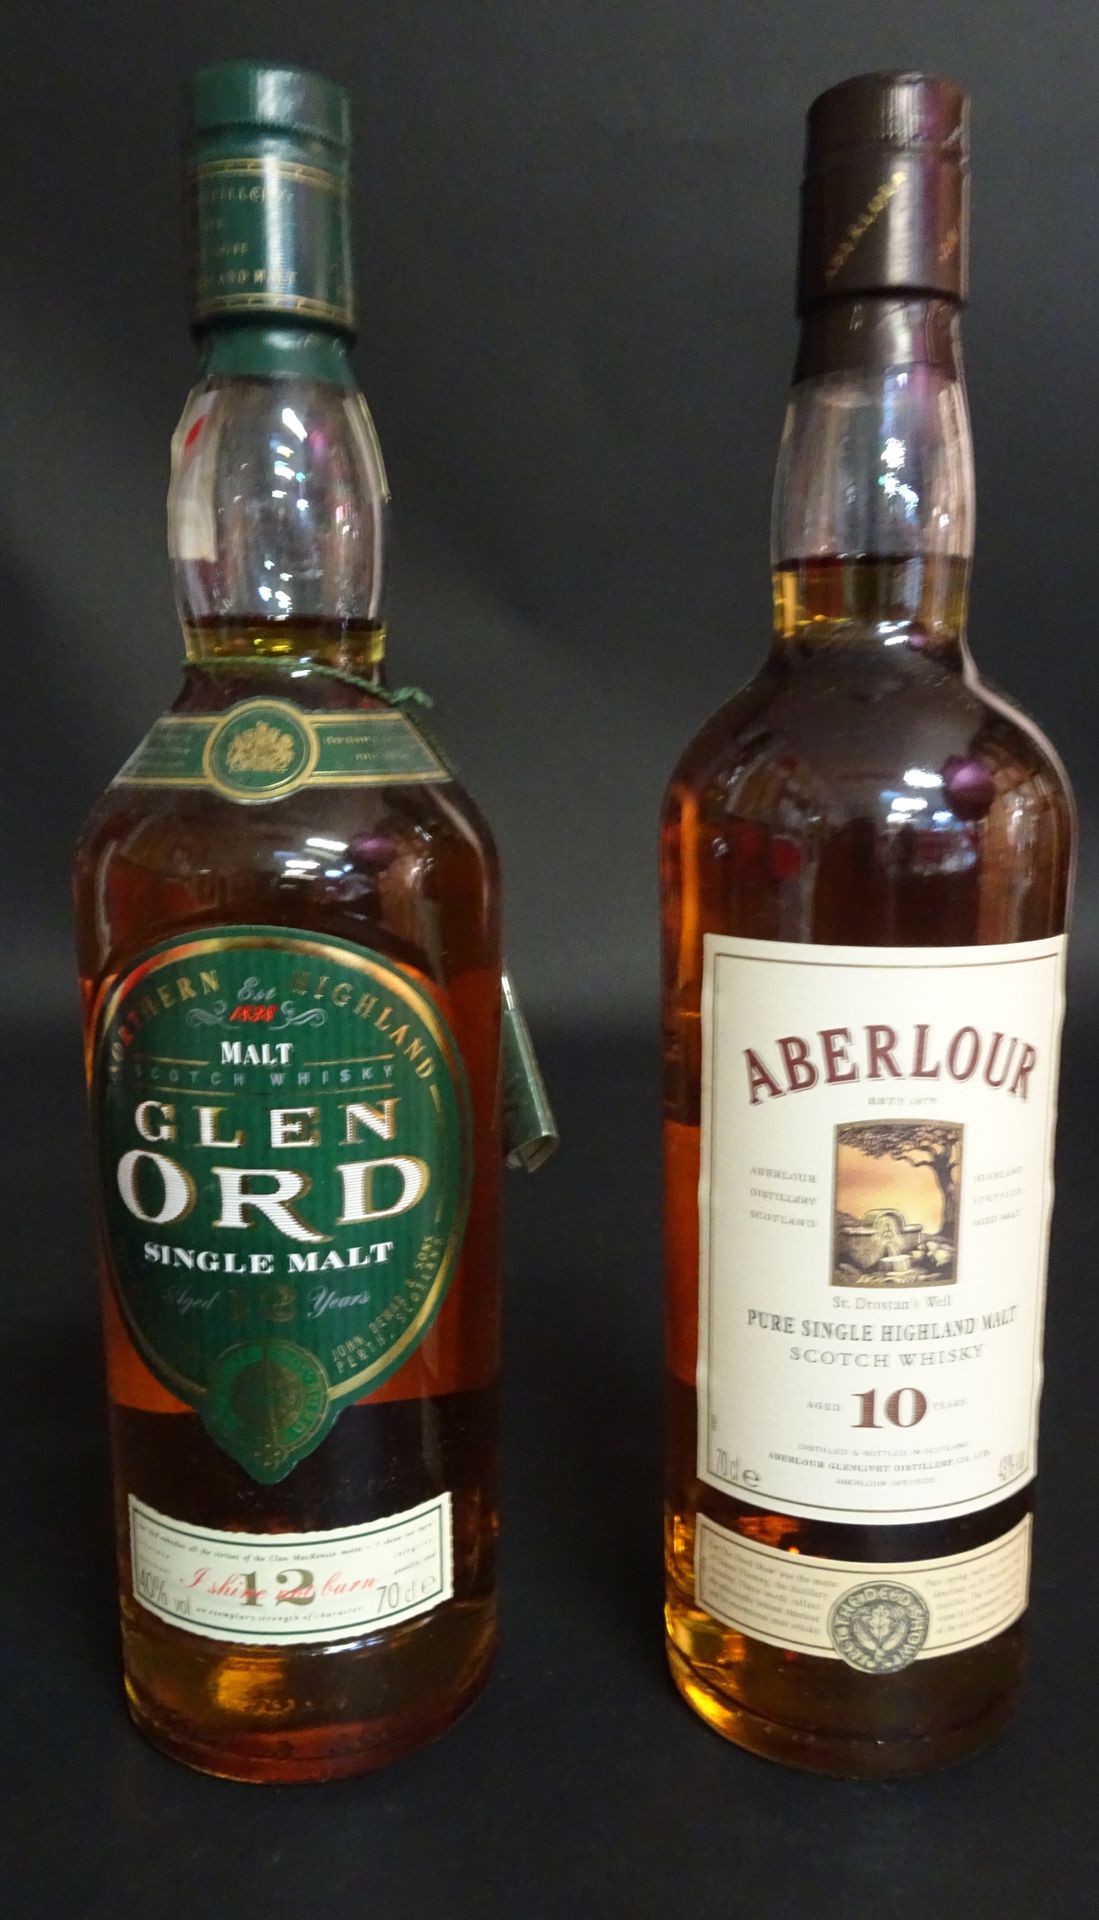 Null Glen Ord Whisky 12 years

+ Aberlour Whisky 10 years

2 bottles